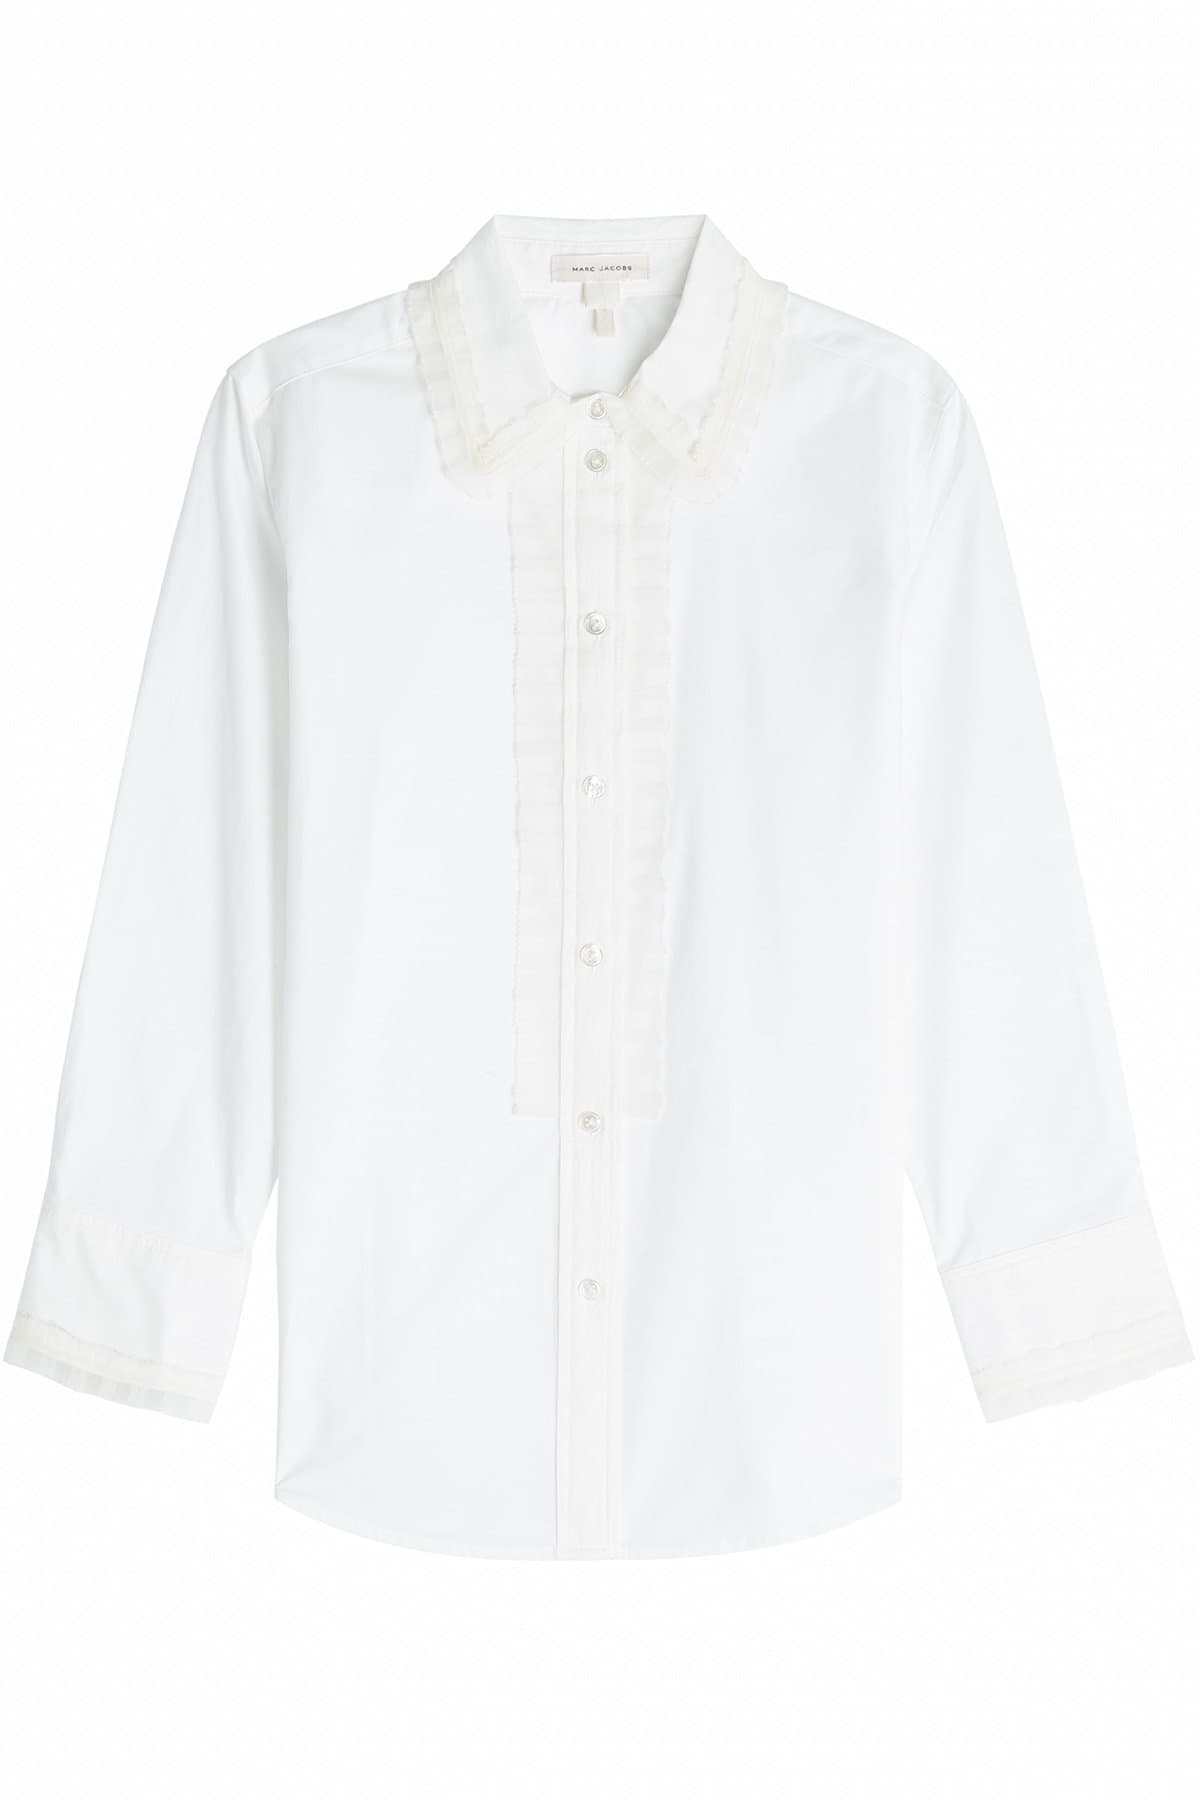 Marc Jacobs - Cotton Shirt with Chiffon Trim